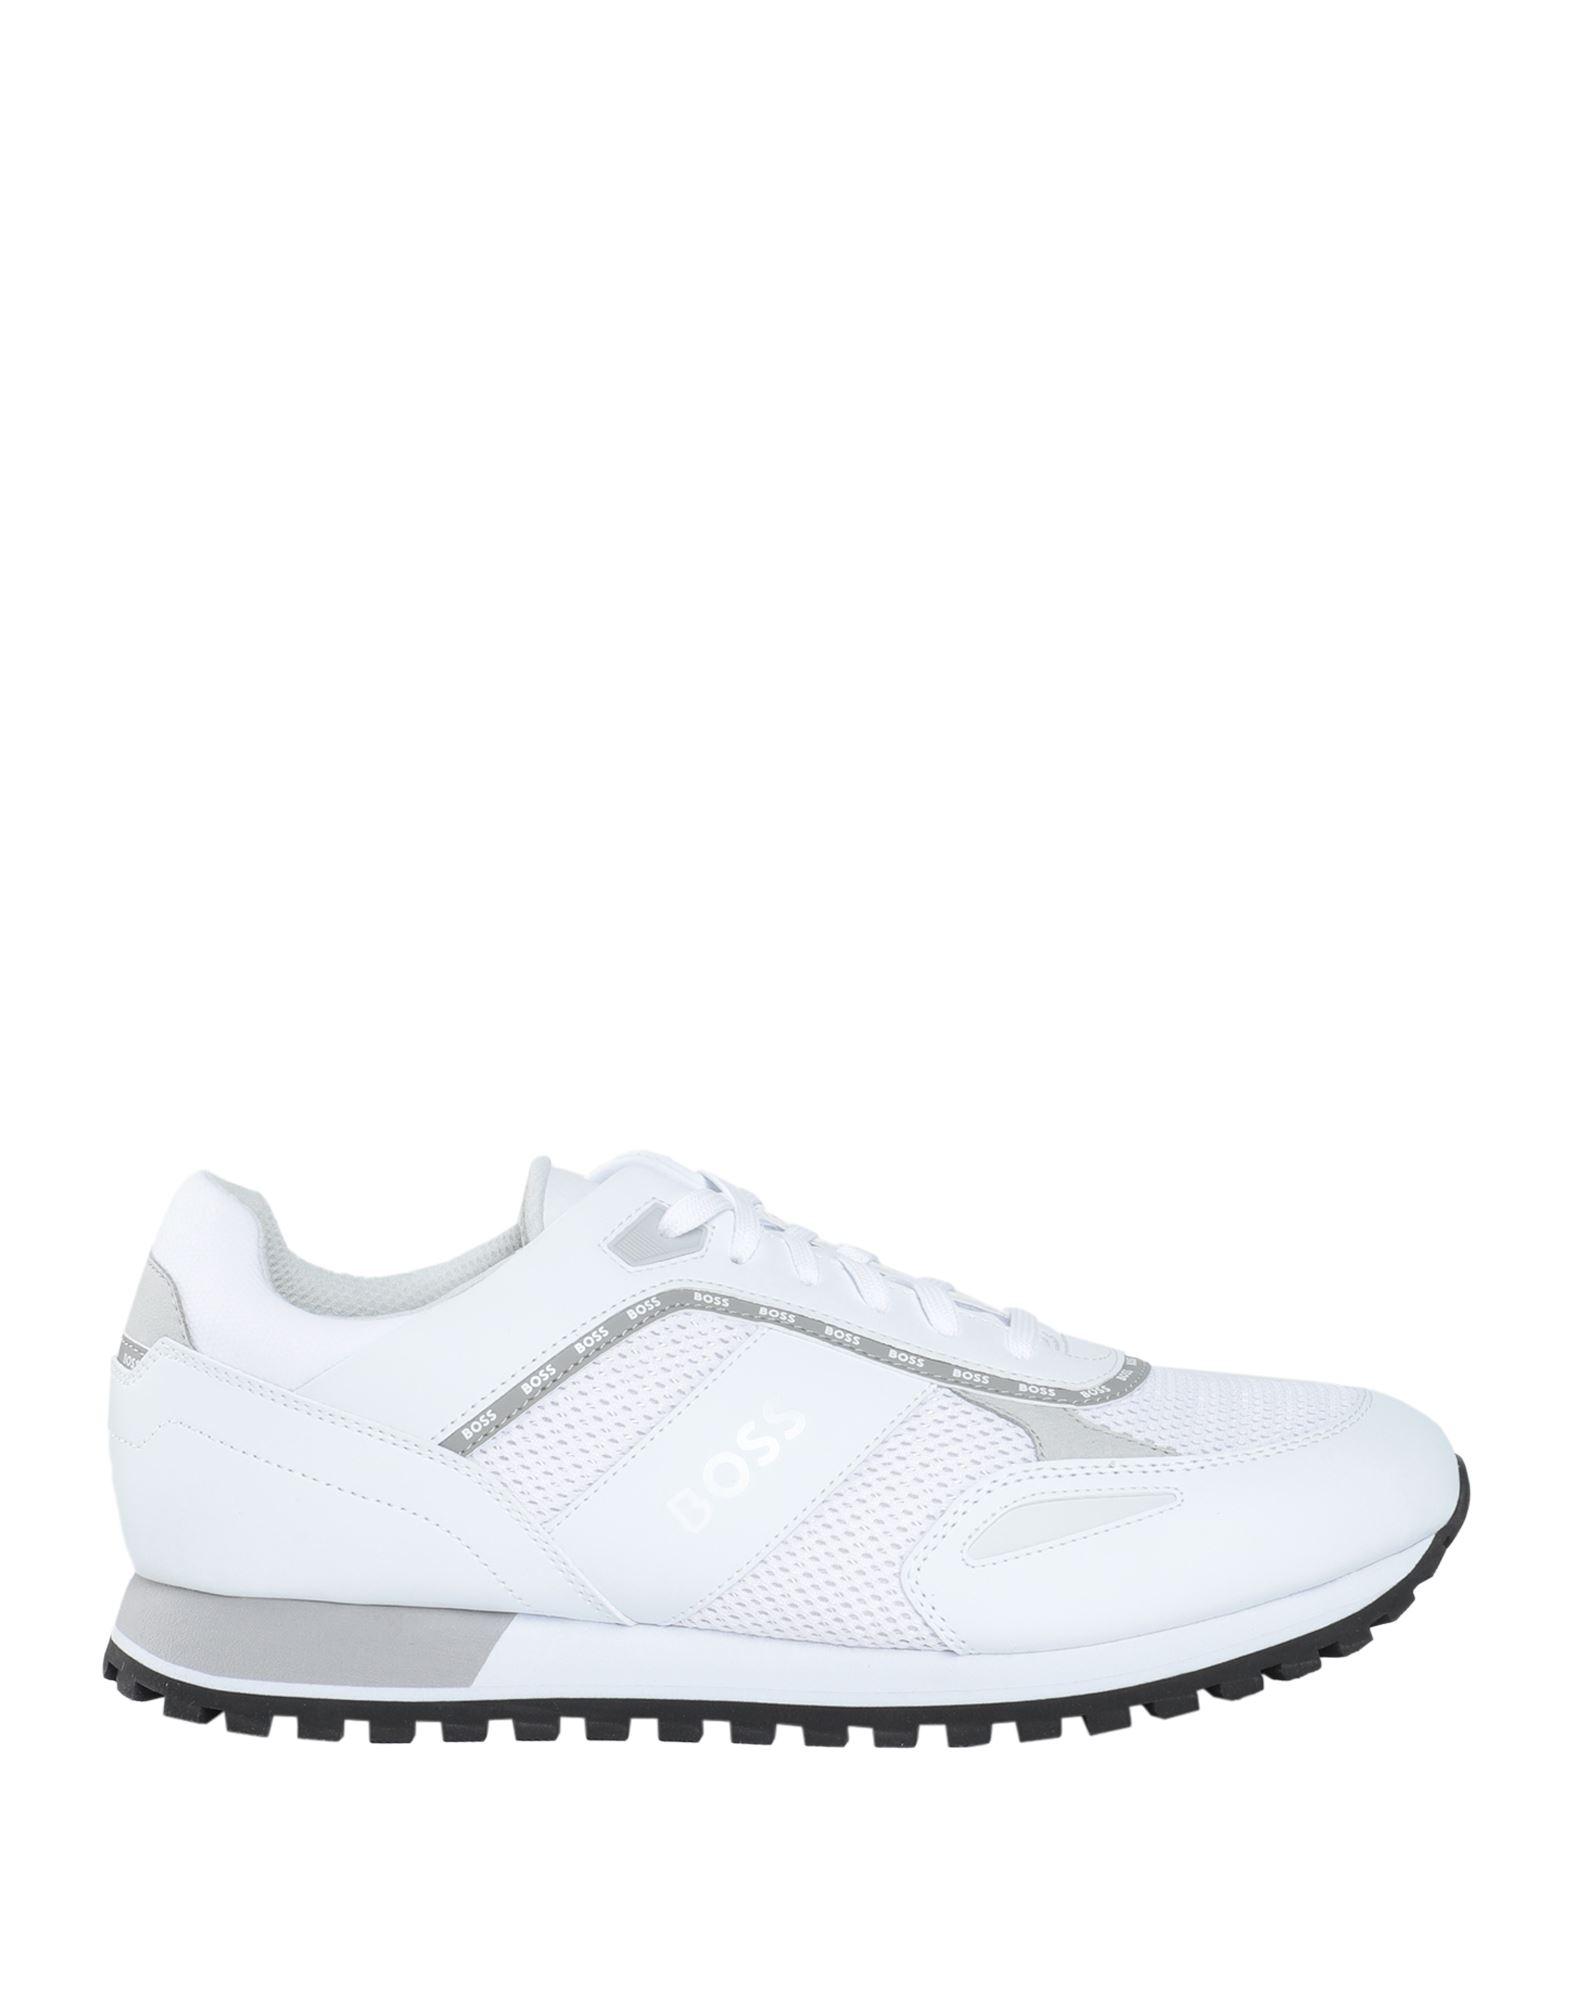 BOSS by HUGO BOSS Sneakers in White for Men | Lyst